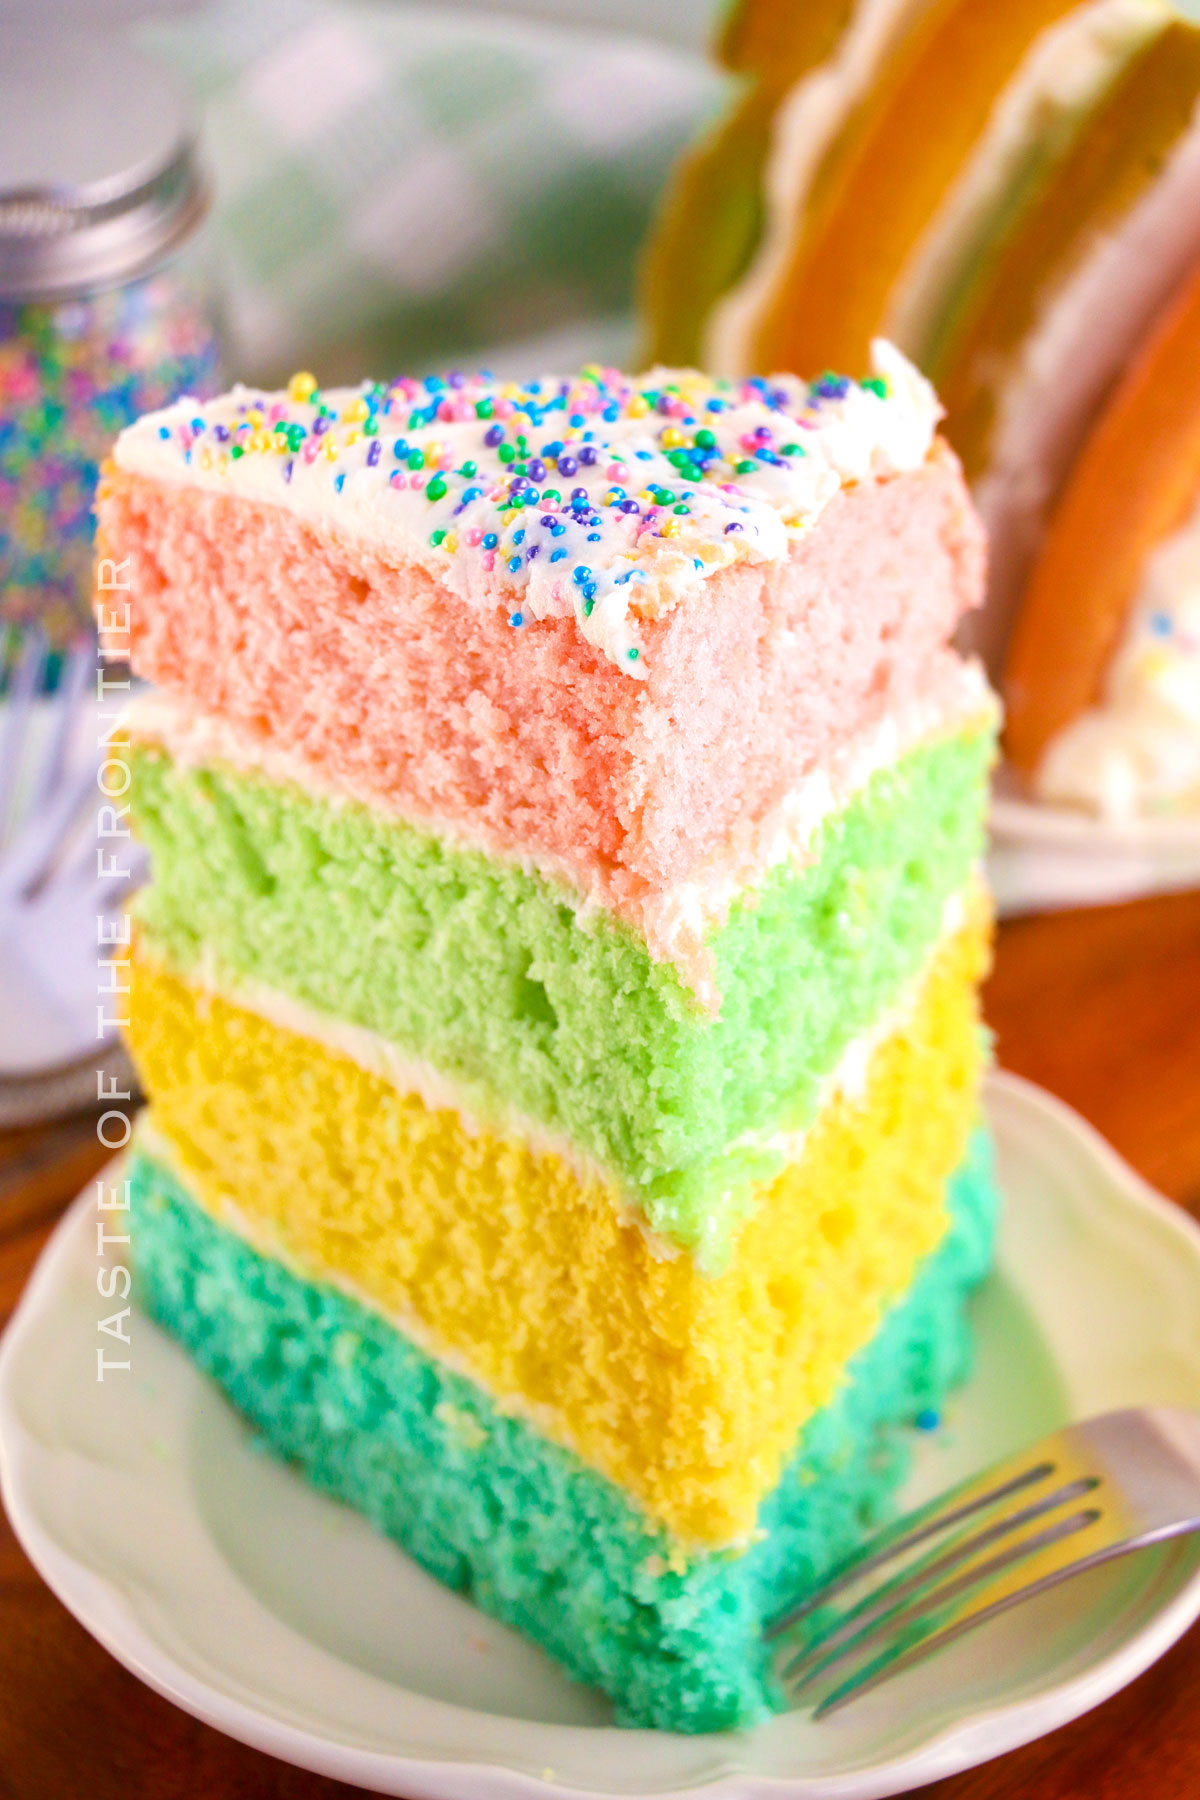 colorful spring cake